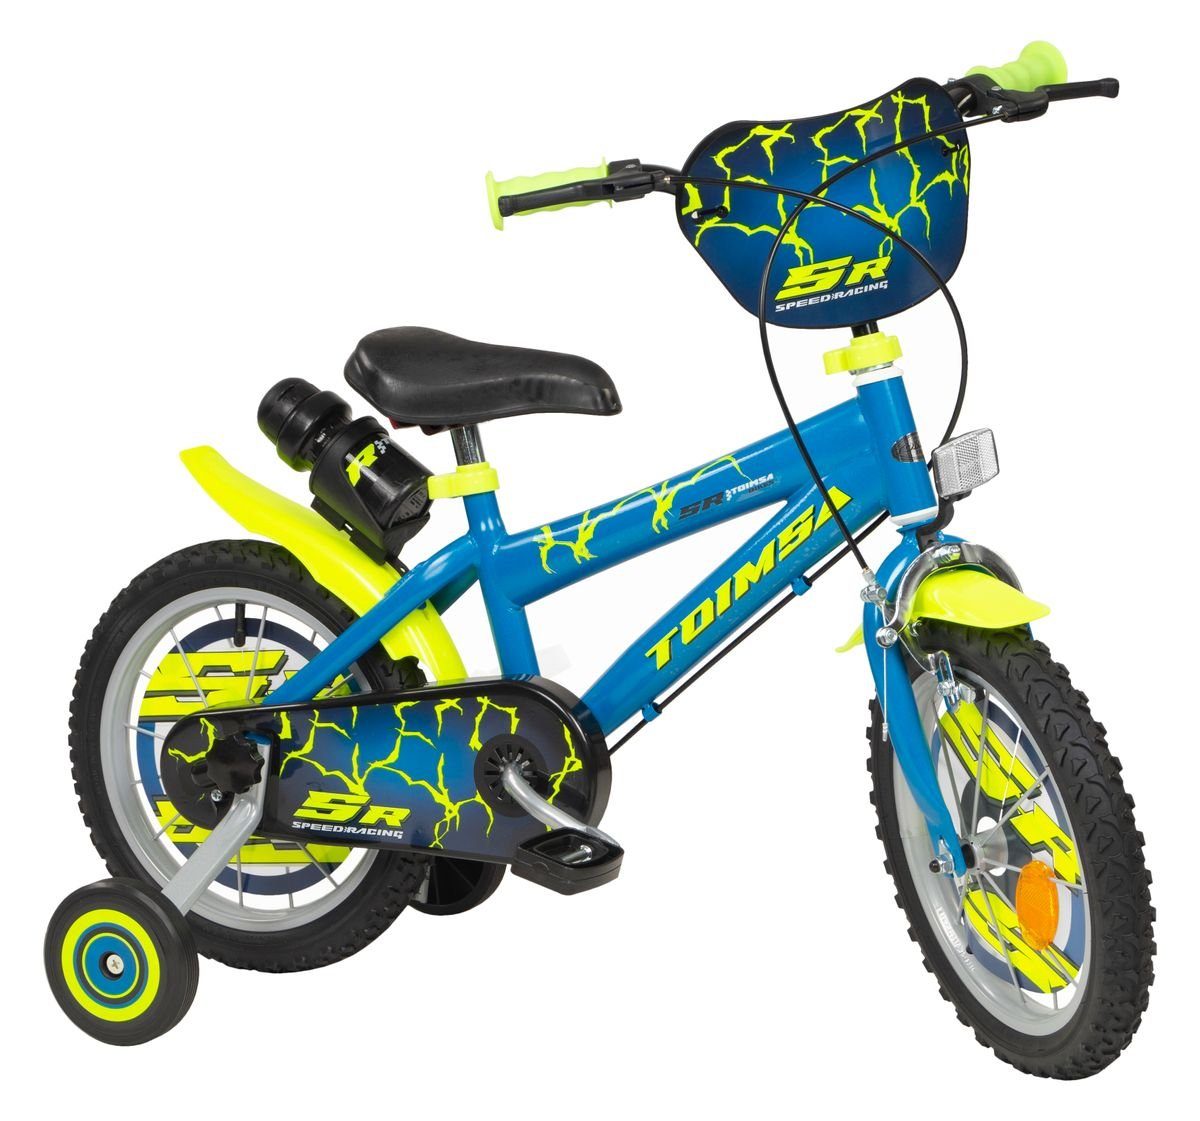 Rad Zoll Blau Toimsa Gang, Bike Lightning 1 Fahrrad Stützräder, Kinderfahrrad 14 Kinderfahrrad 14212, Bikes Kinder Trinkflasche